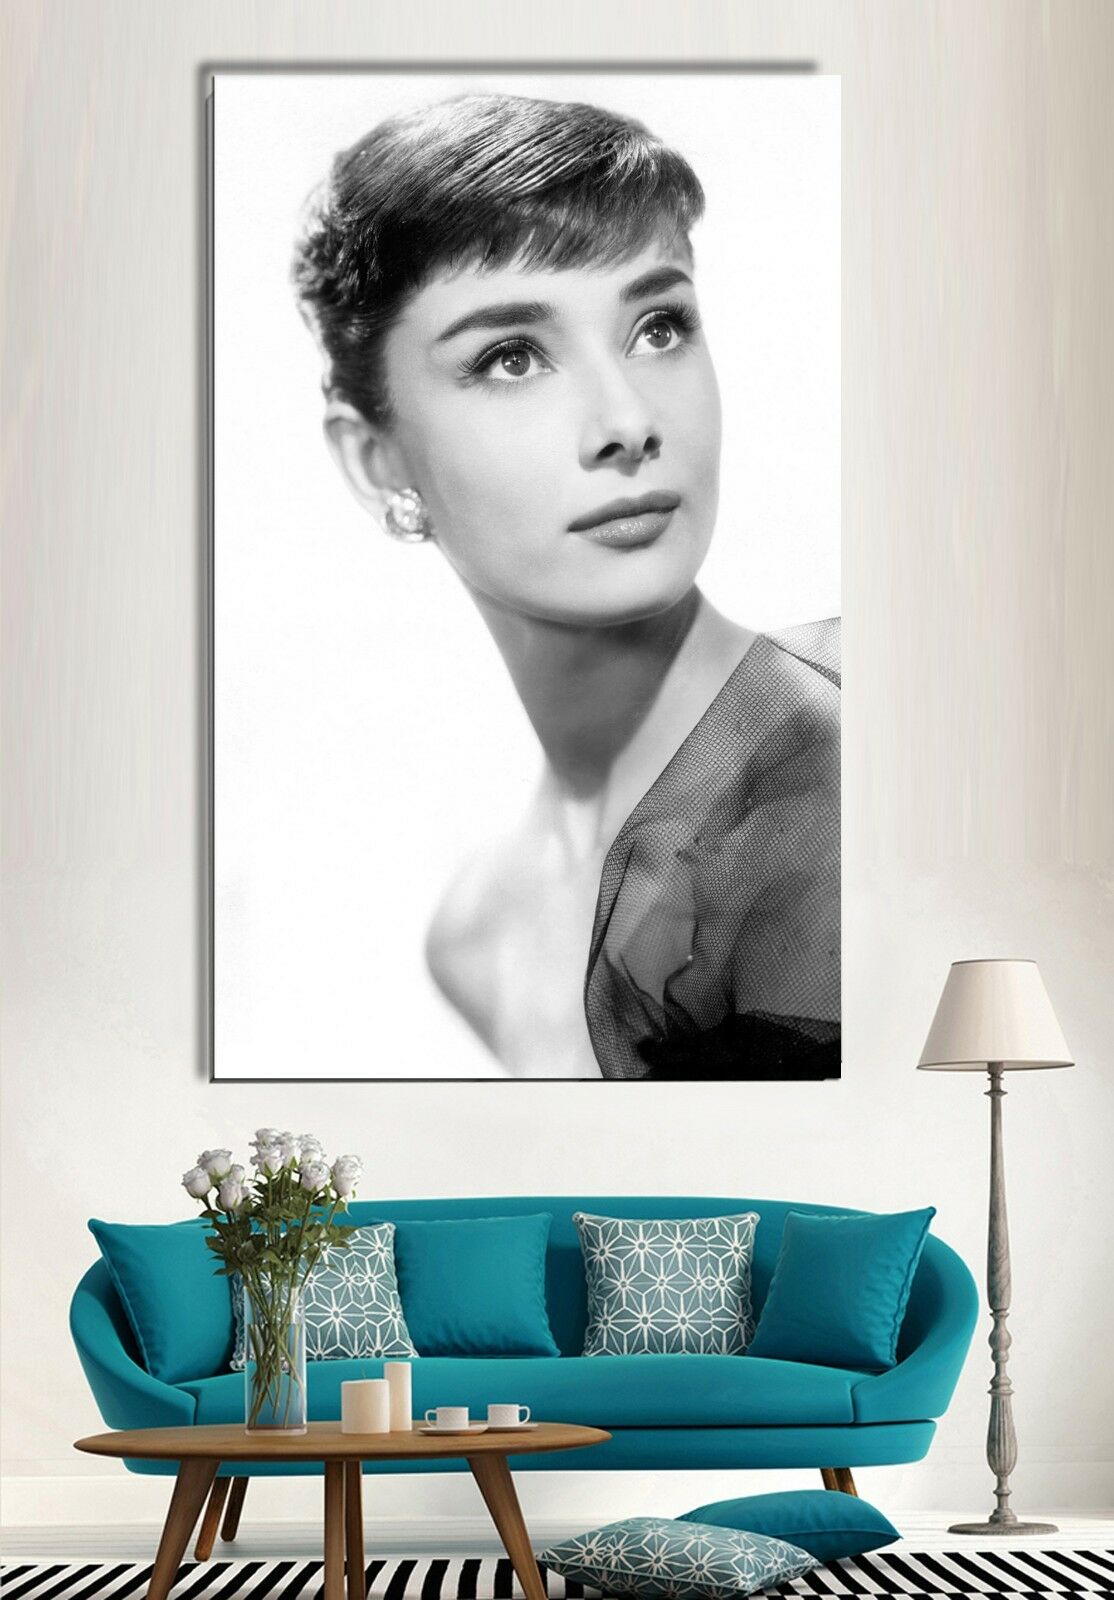 Audrey Hepburn Stretched Canvas Print Framed Wall Art Fashion Shop Decor Gift